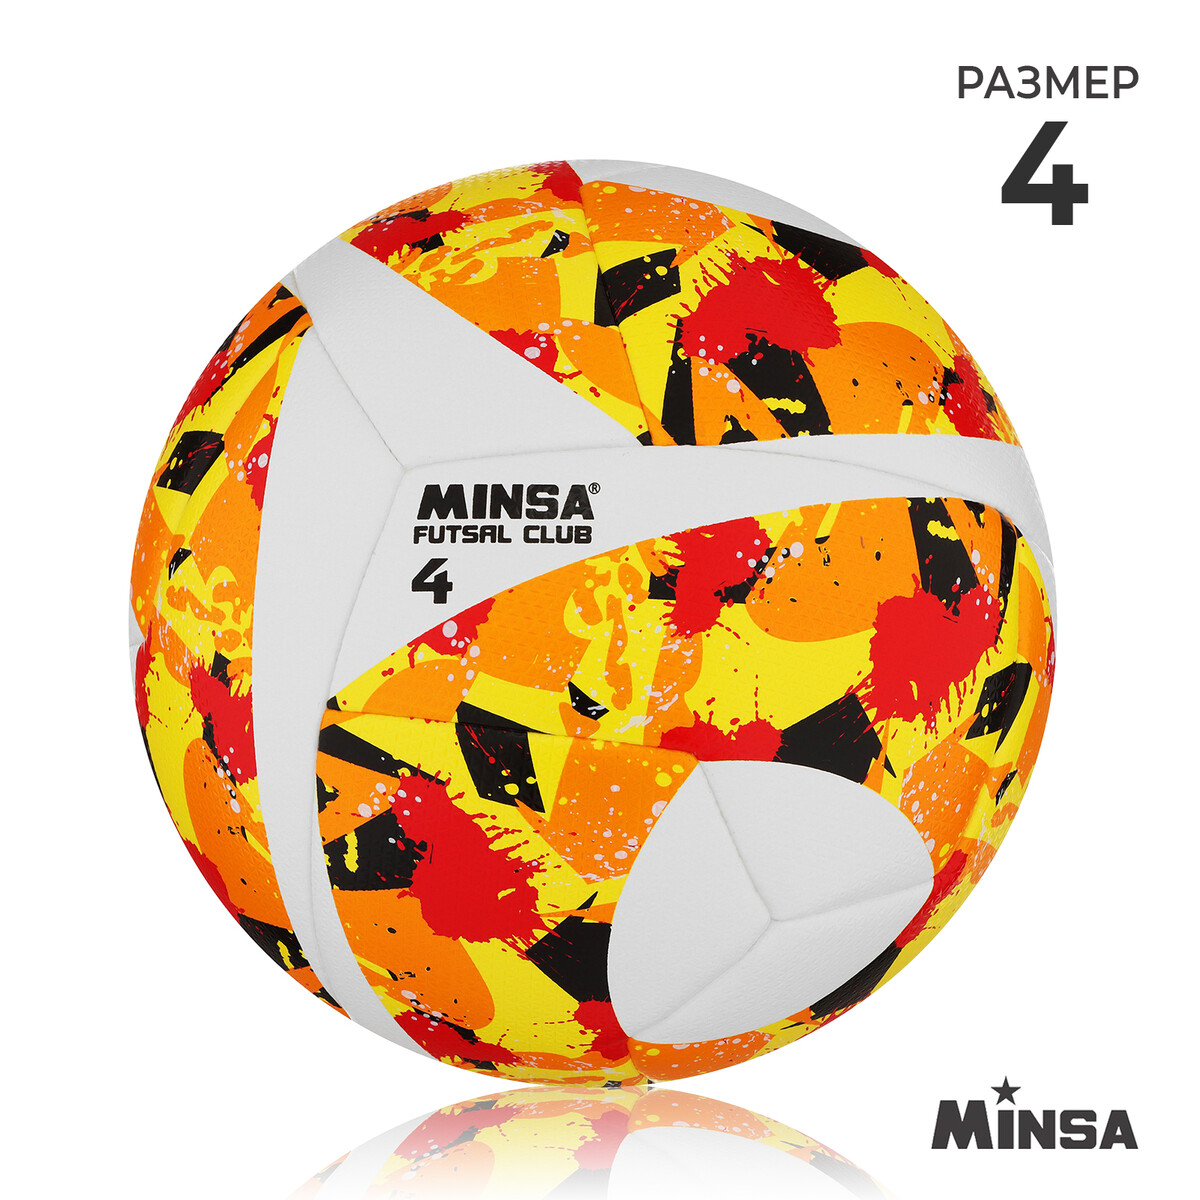 Мяч футбольный minsa futsal club, pu, гибридная сшивка, размер 4 мяч футзальный torres futsal club pu гибридная сшивка 10 панелей р 4